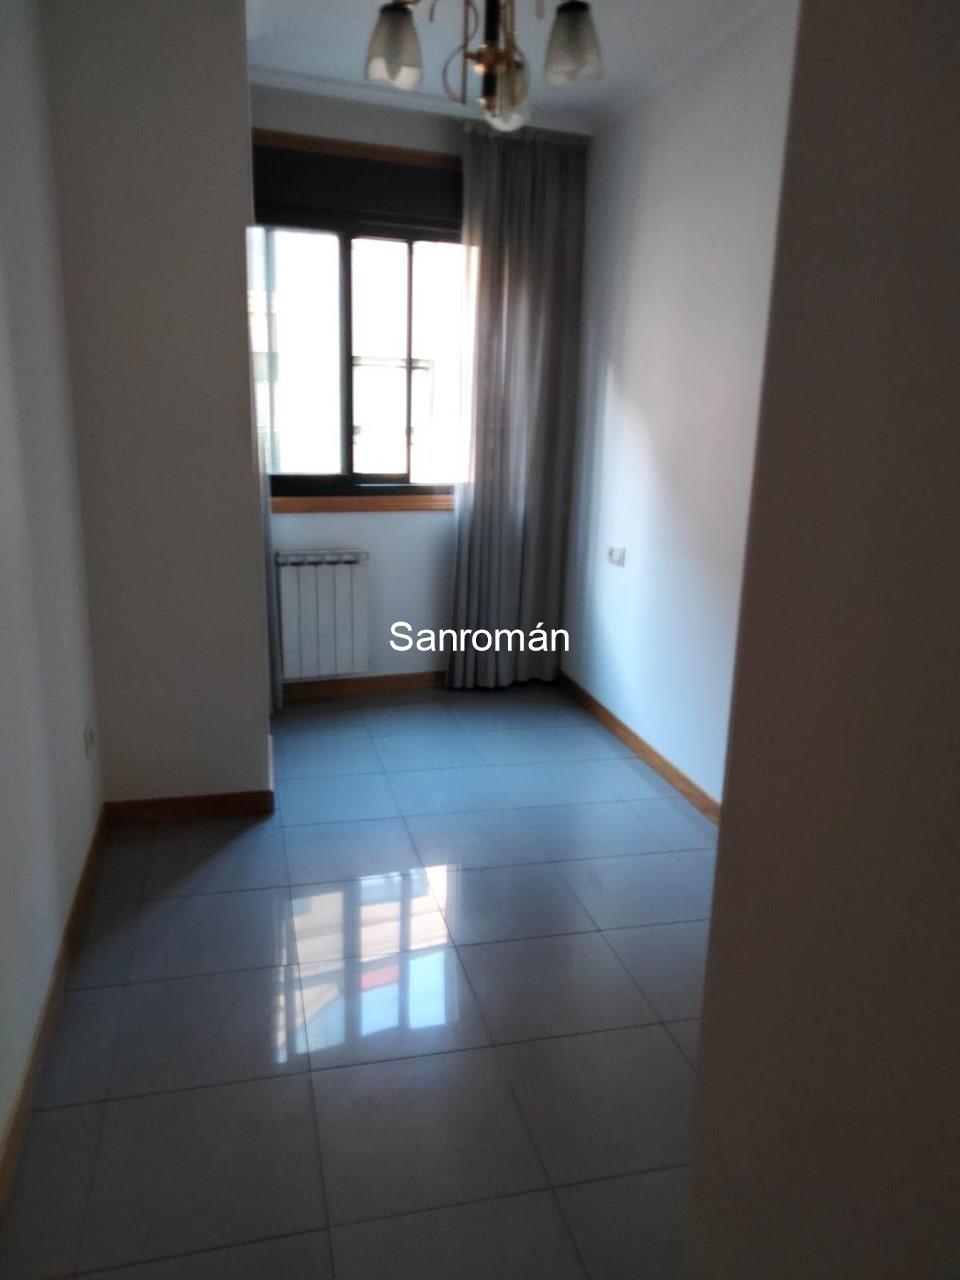 Foto 7 Apartamento de 2 dormitorios en Ramallosa - Nigrán.